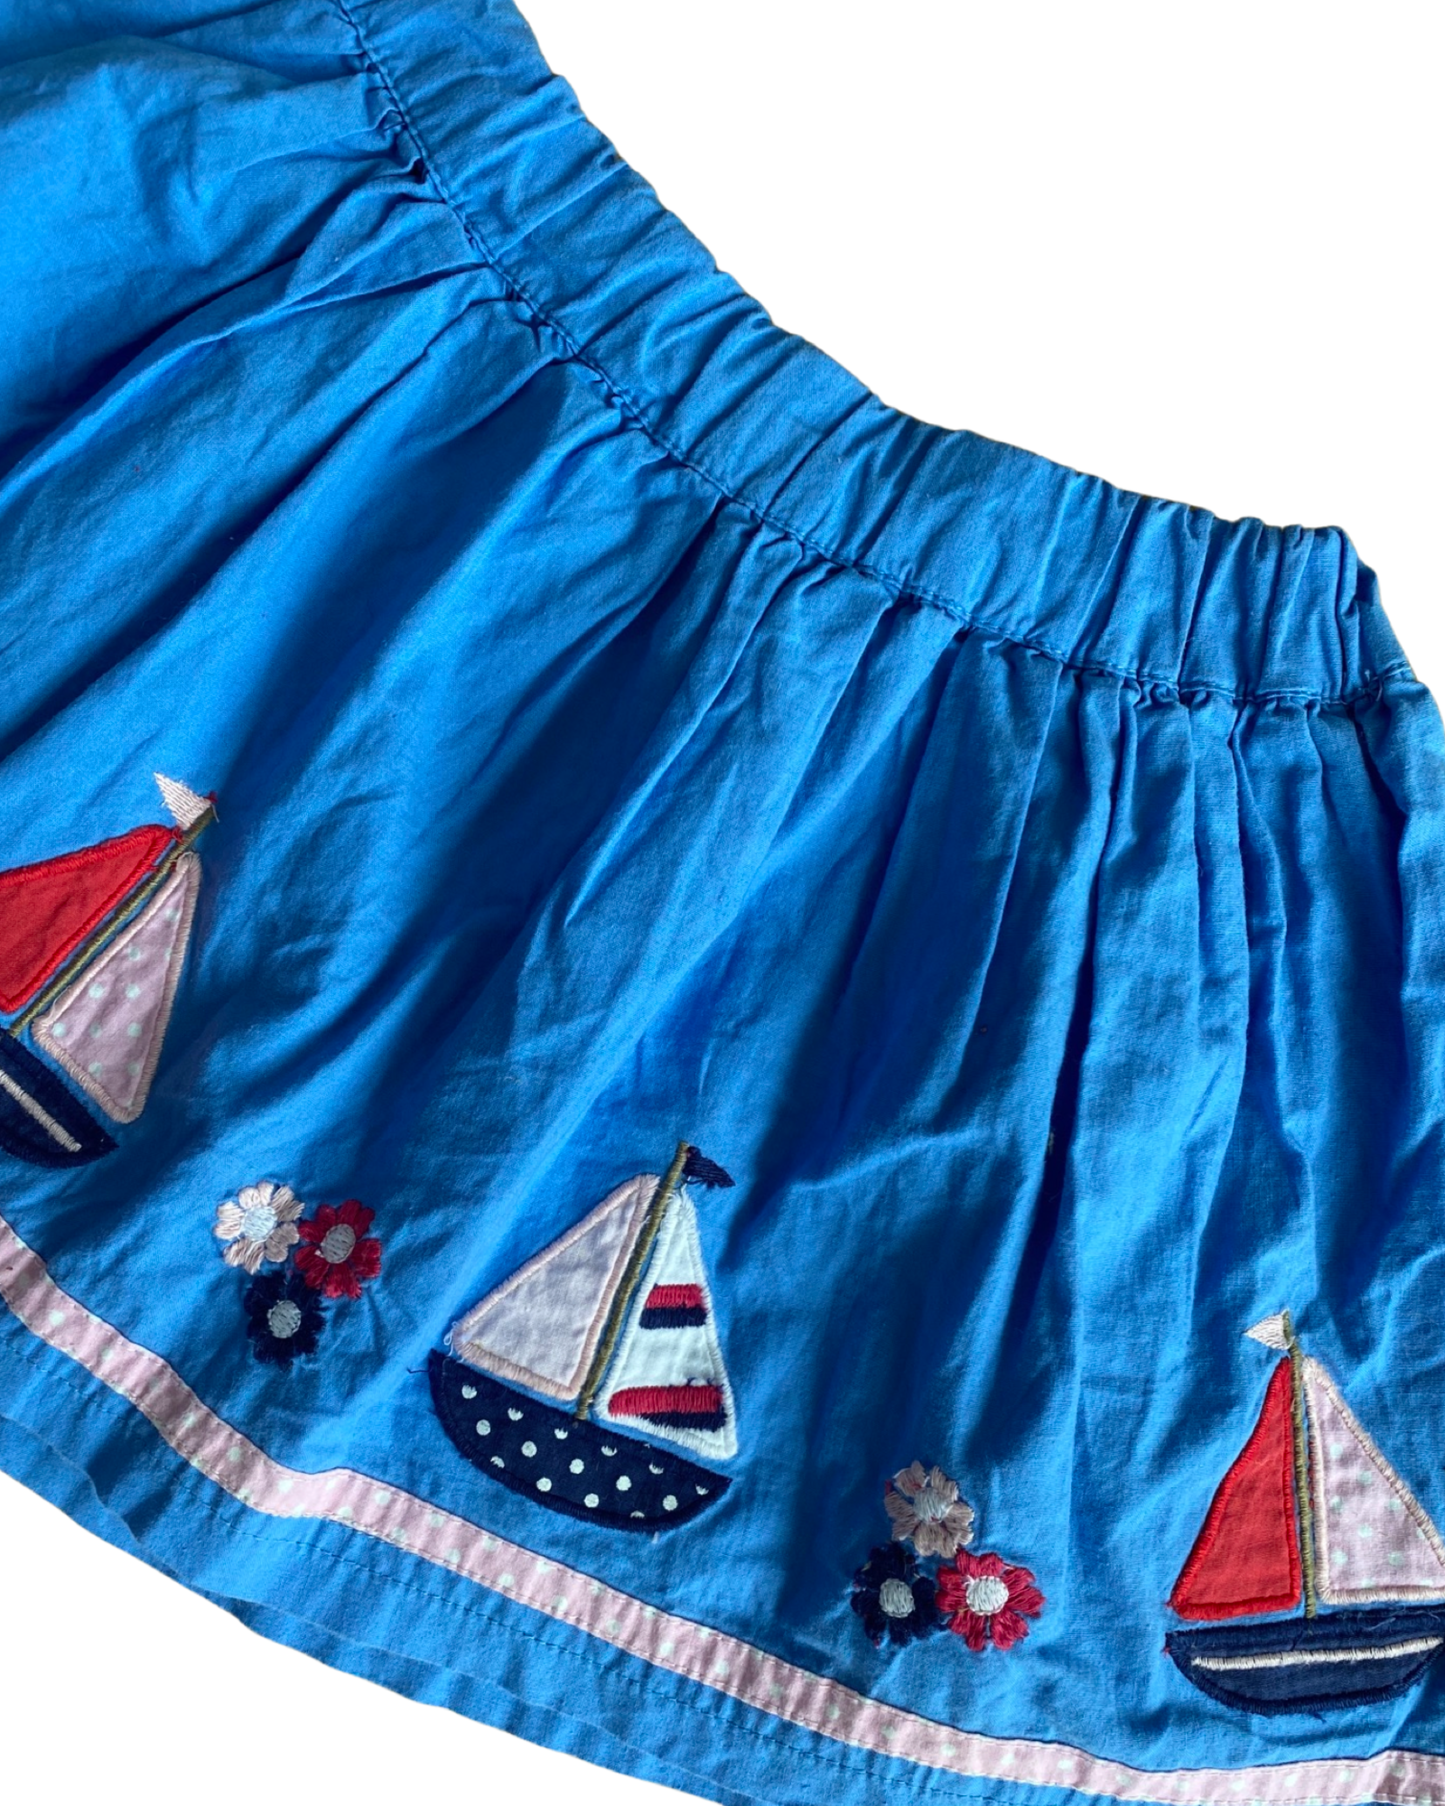 JoJo Maman Bebe sailboat skirt (18-24mths)